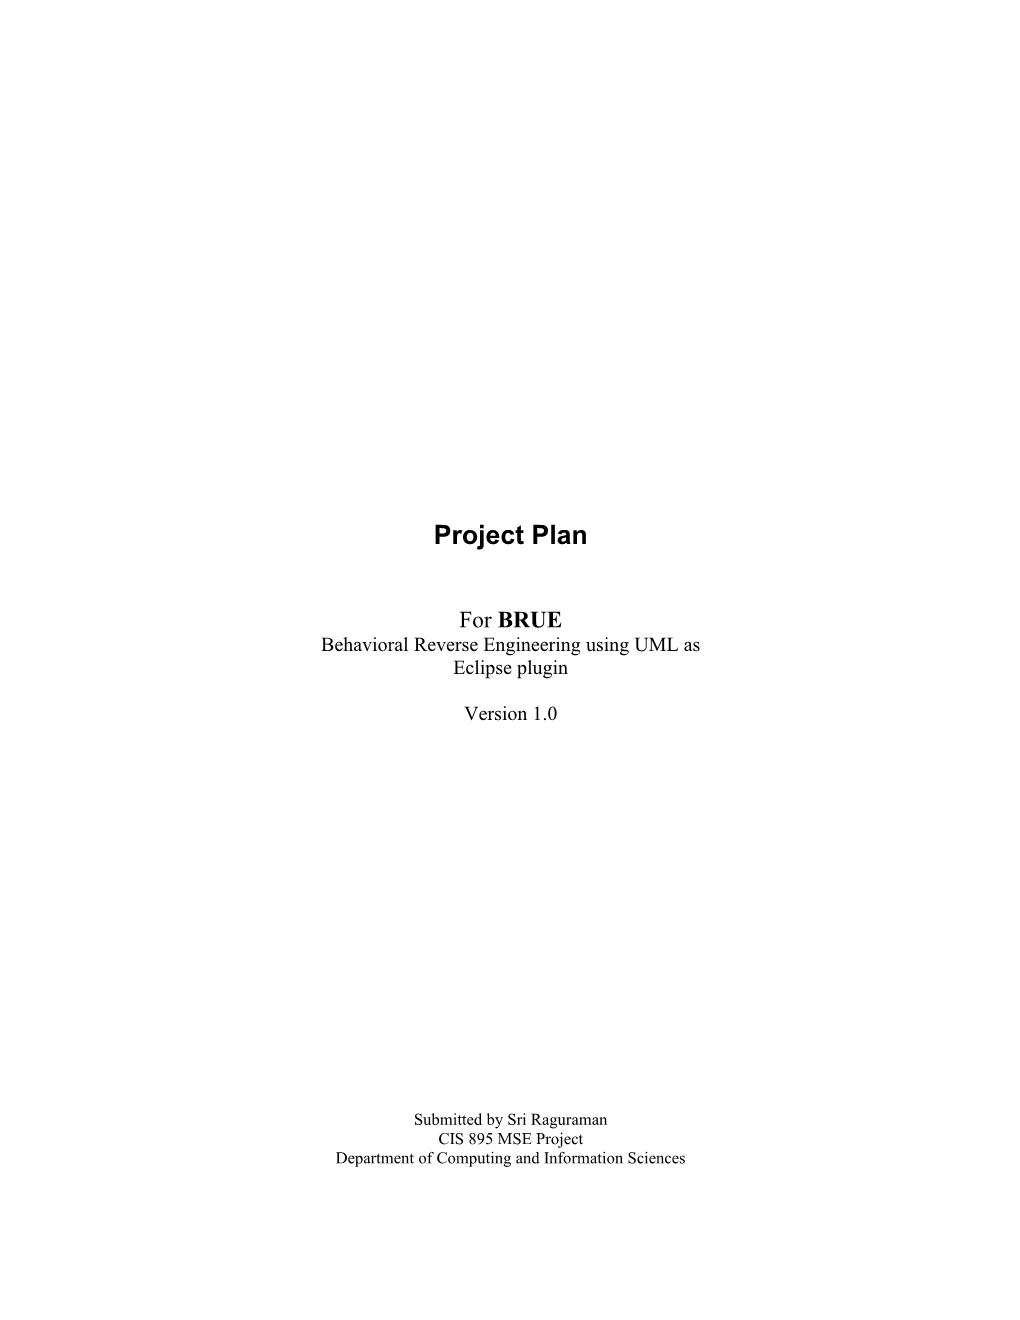 CIS 895 Brueproject Plan Version 1.0